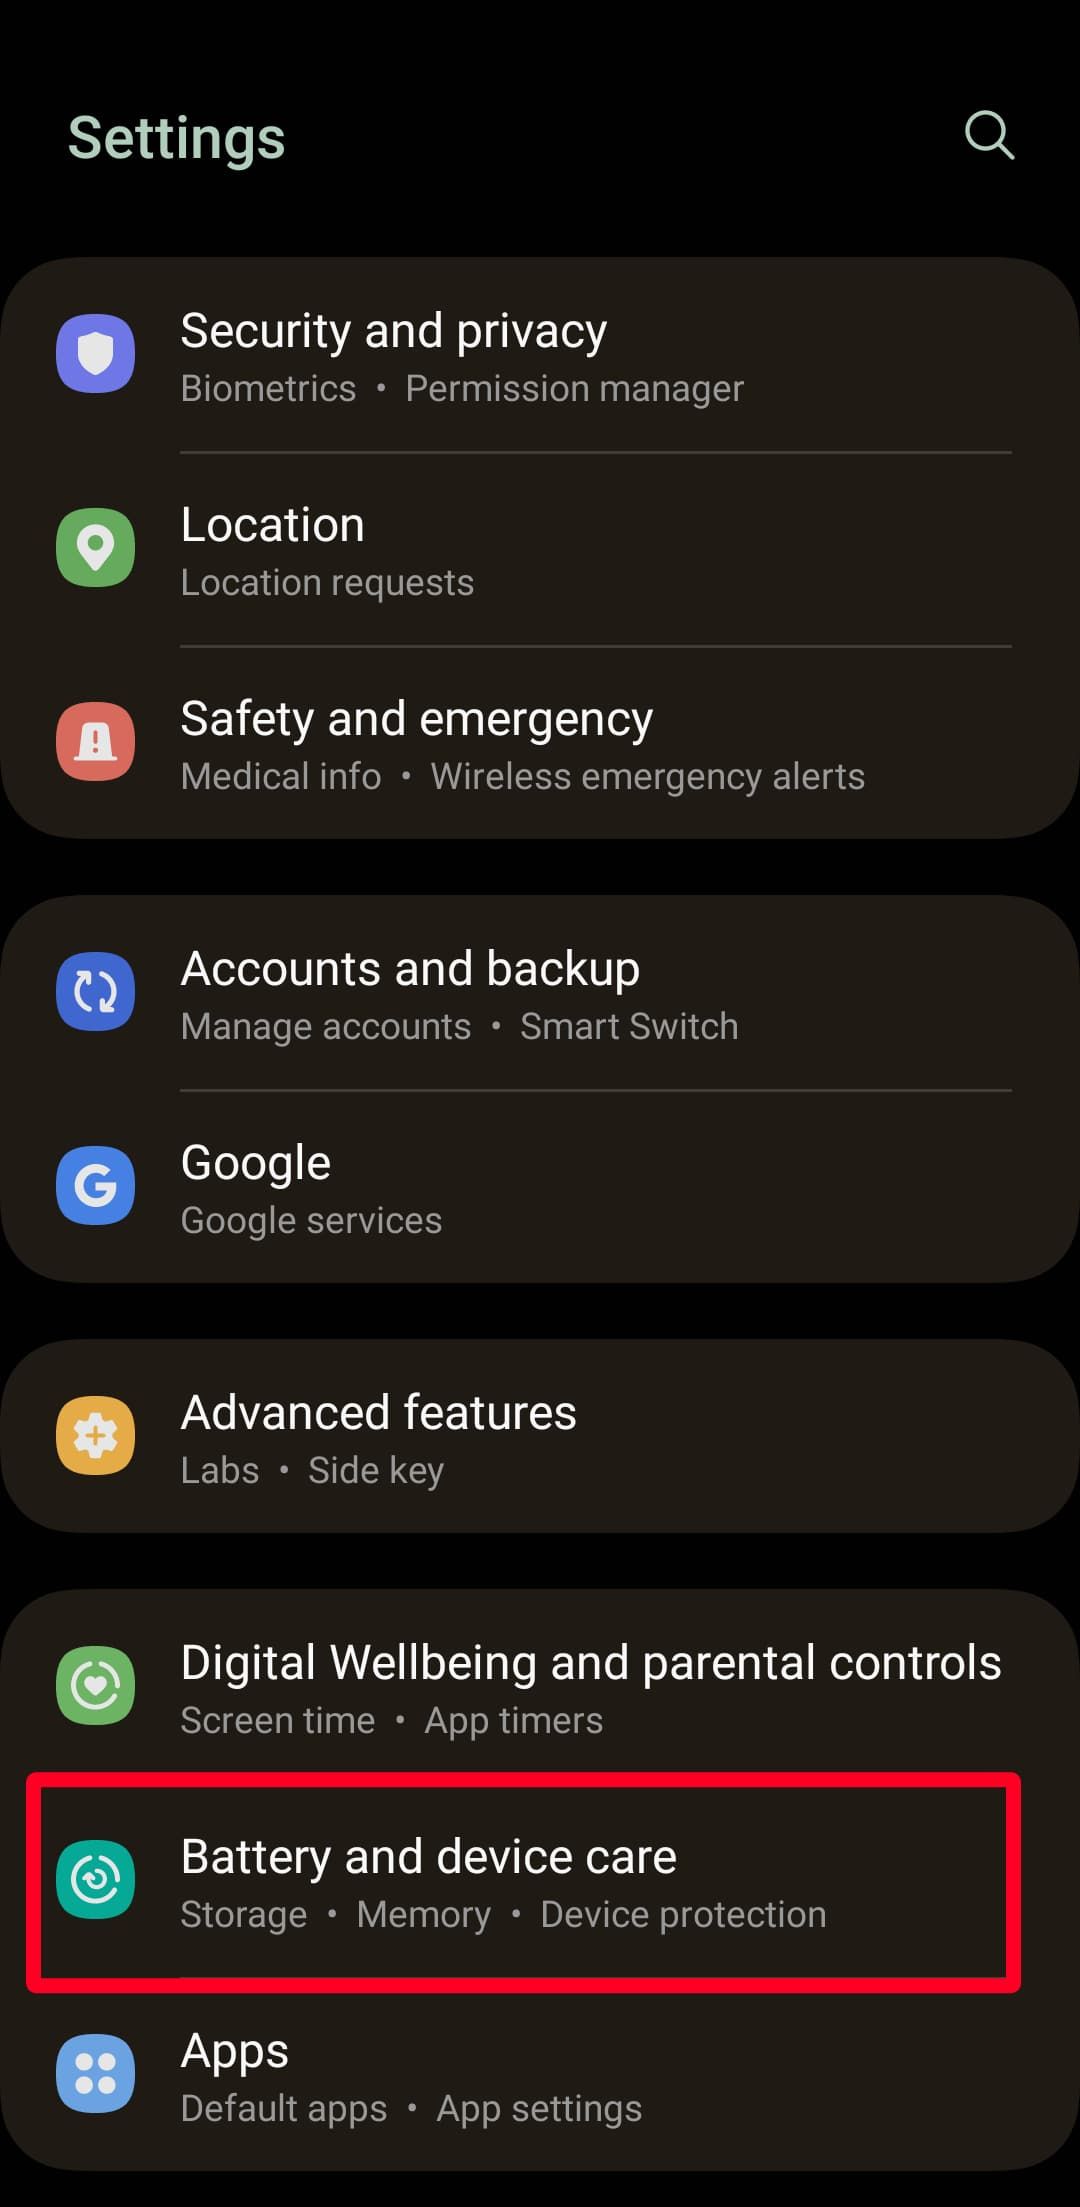 Settings menu on Samsung Android phone